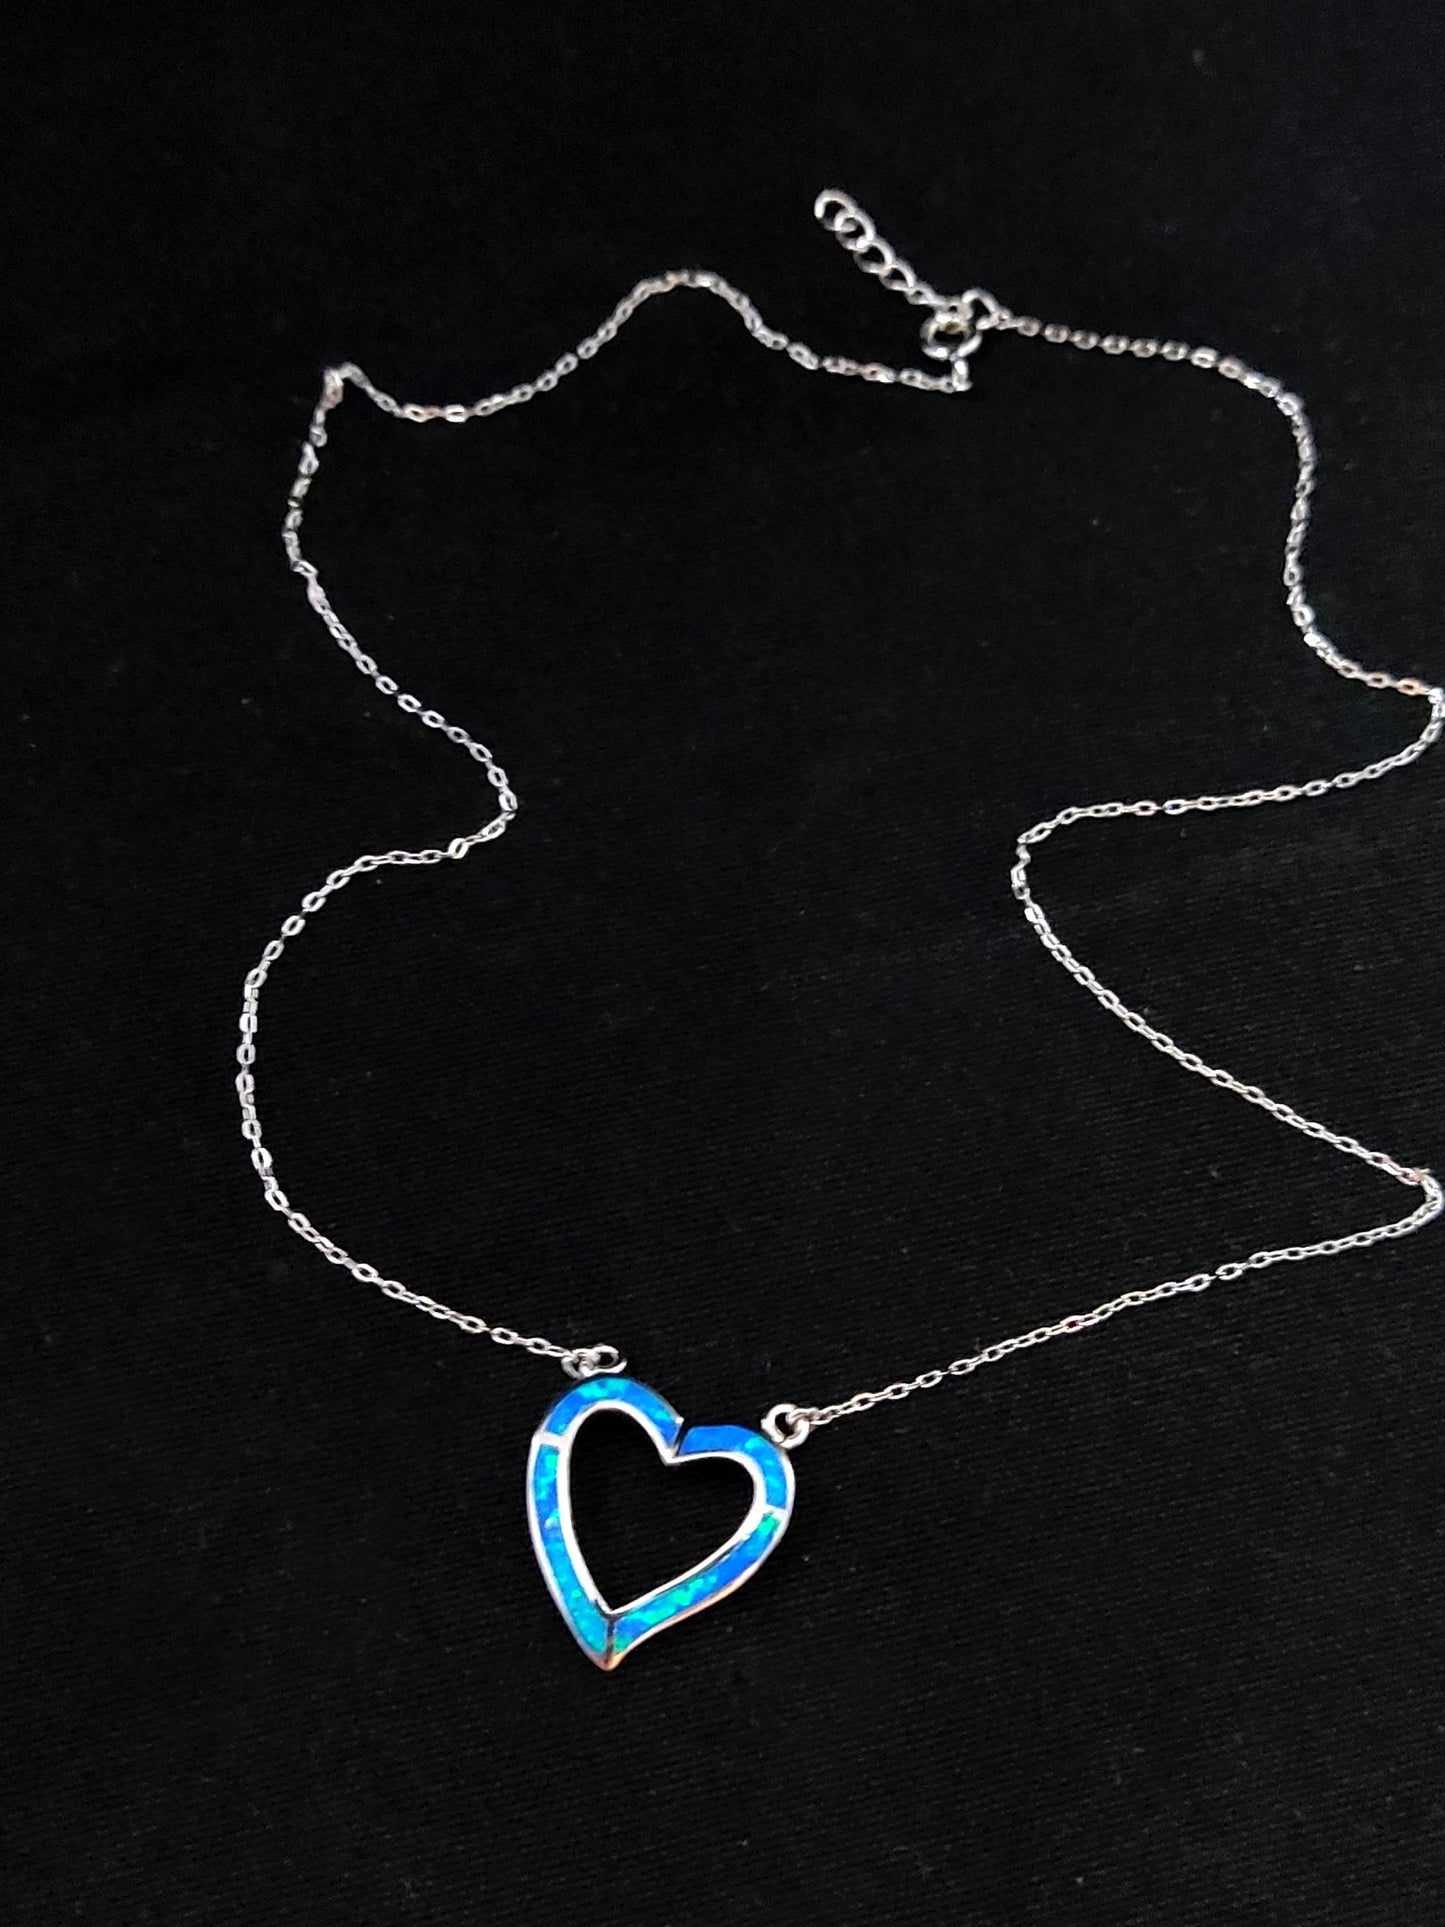 Sterling Silber 925 Fire Rainbow Blue Opal Heart Fine Halskette, Chain And Blue Opal Pendant, Blau Opal Herz Anhanger, Bijoux Grecque, Heart